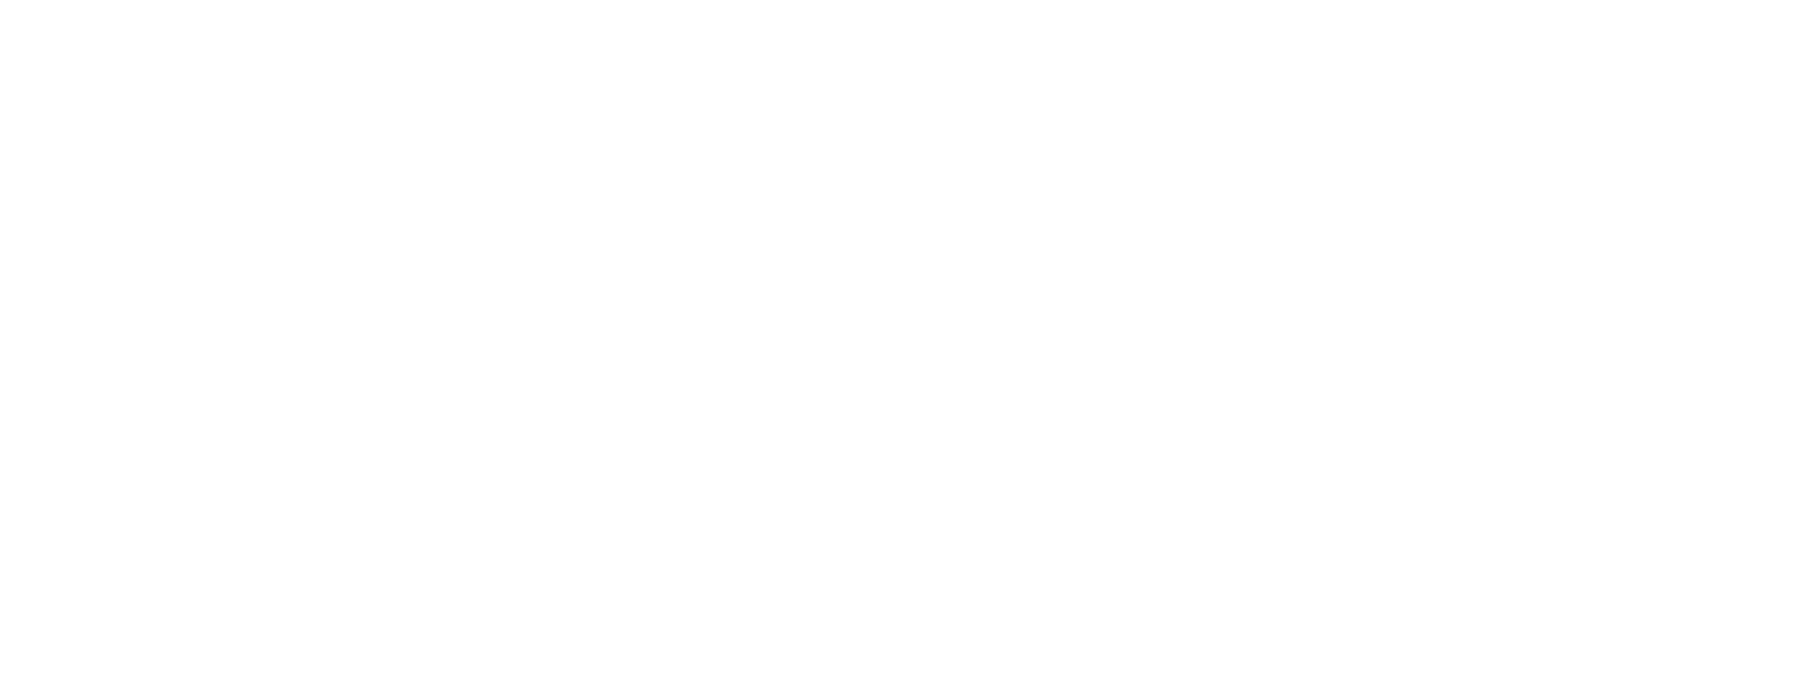 Devwoods Salon Studio Logo